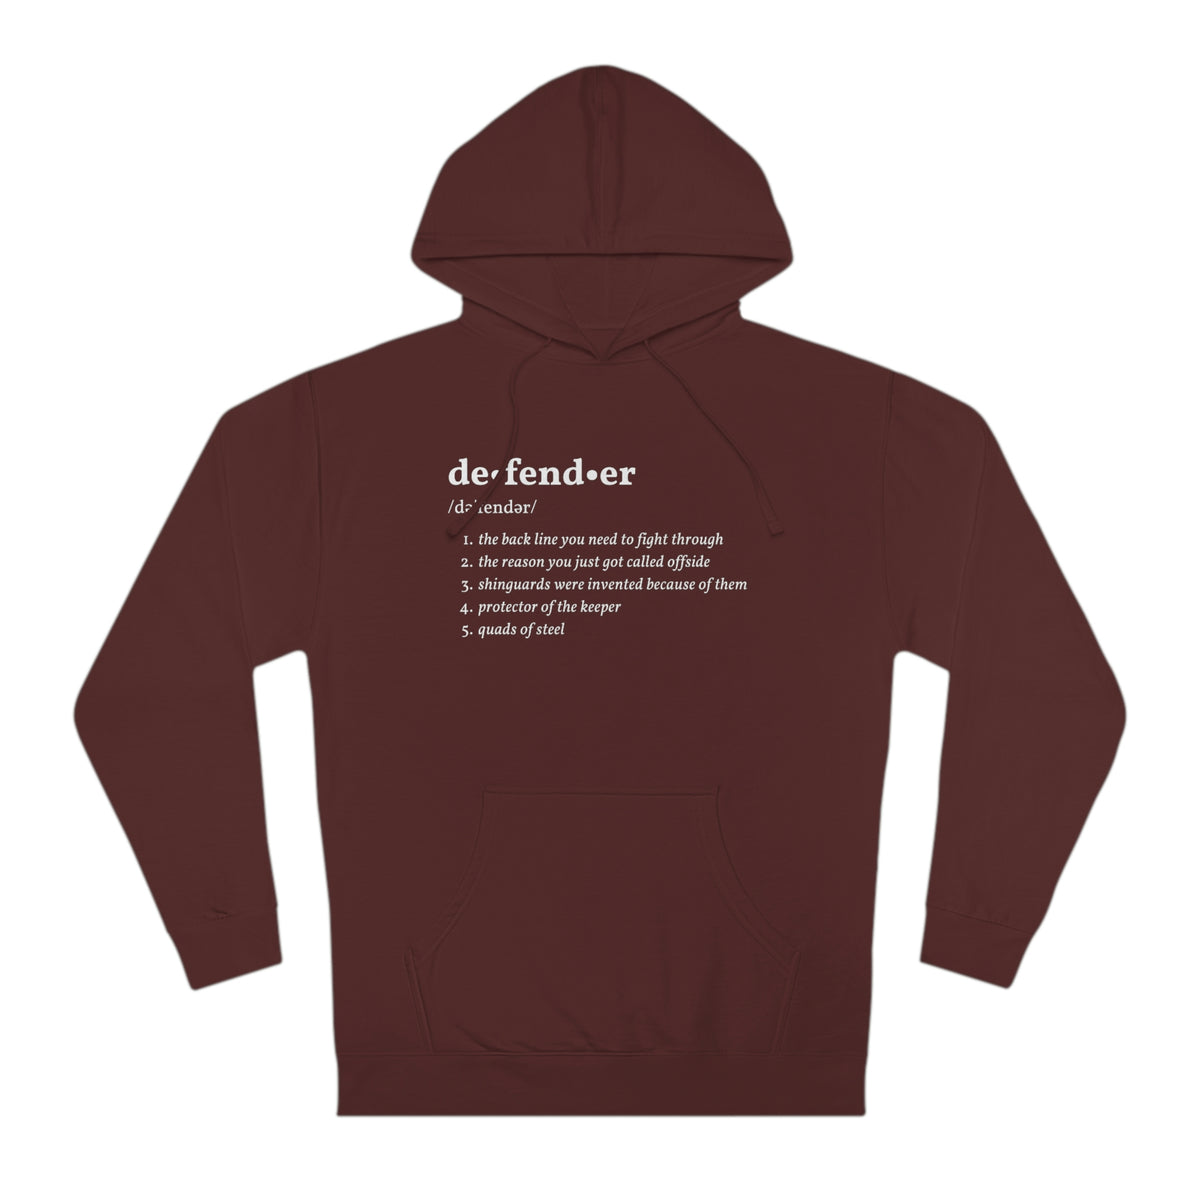 Defender Definition Adult Hooded Sweatshirt